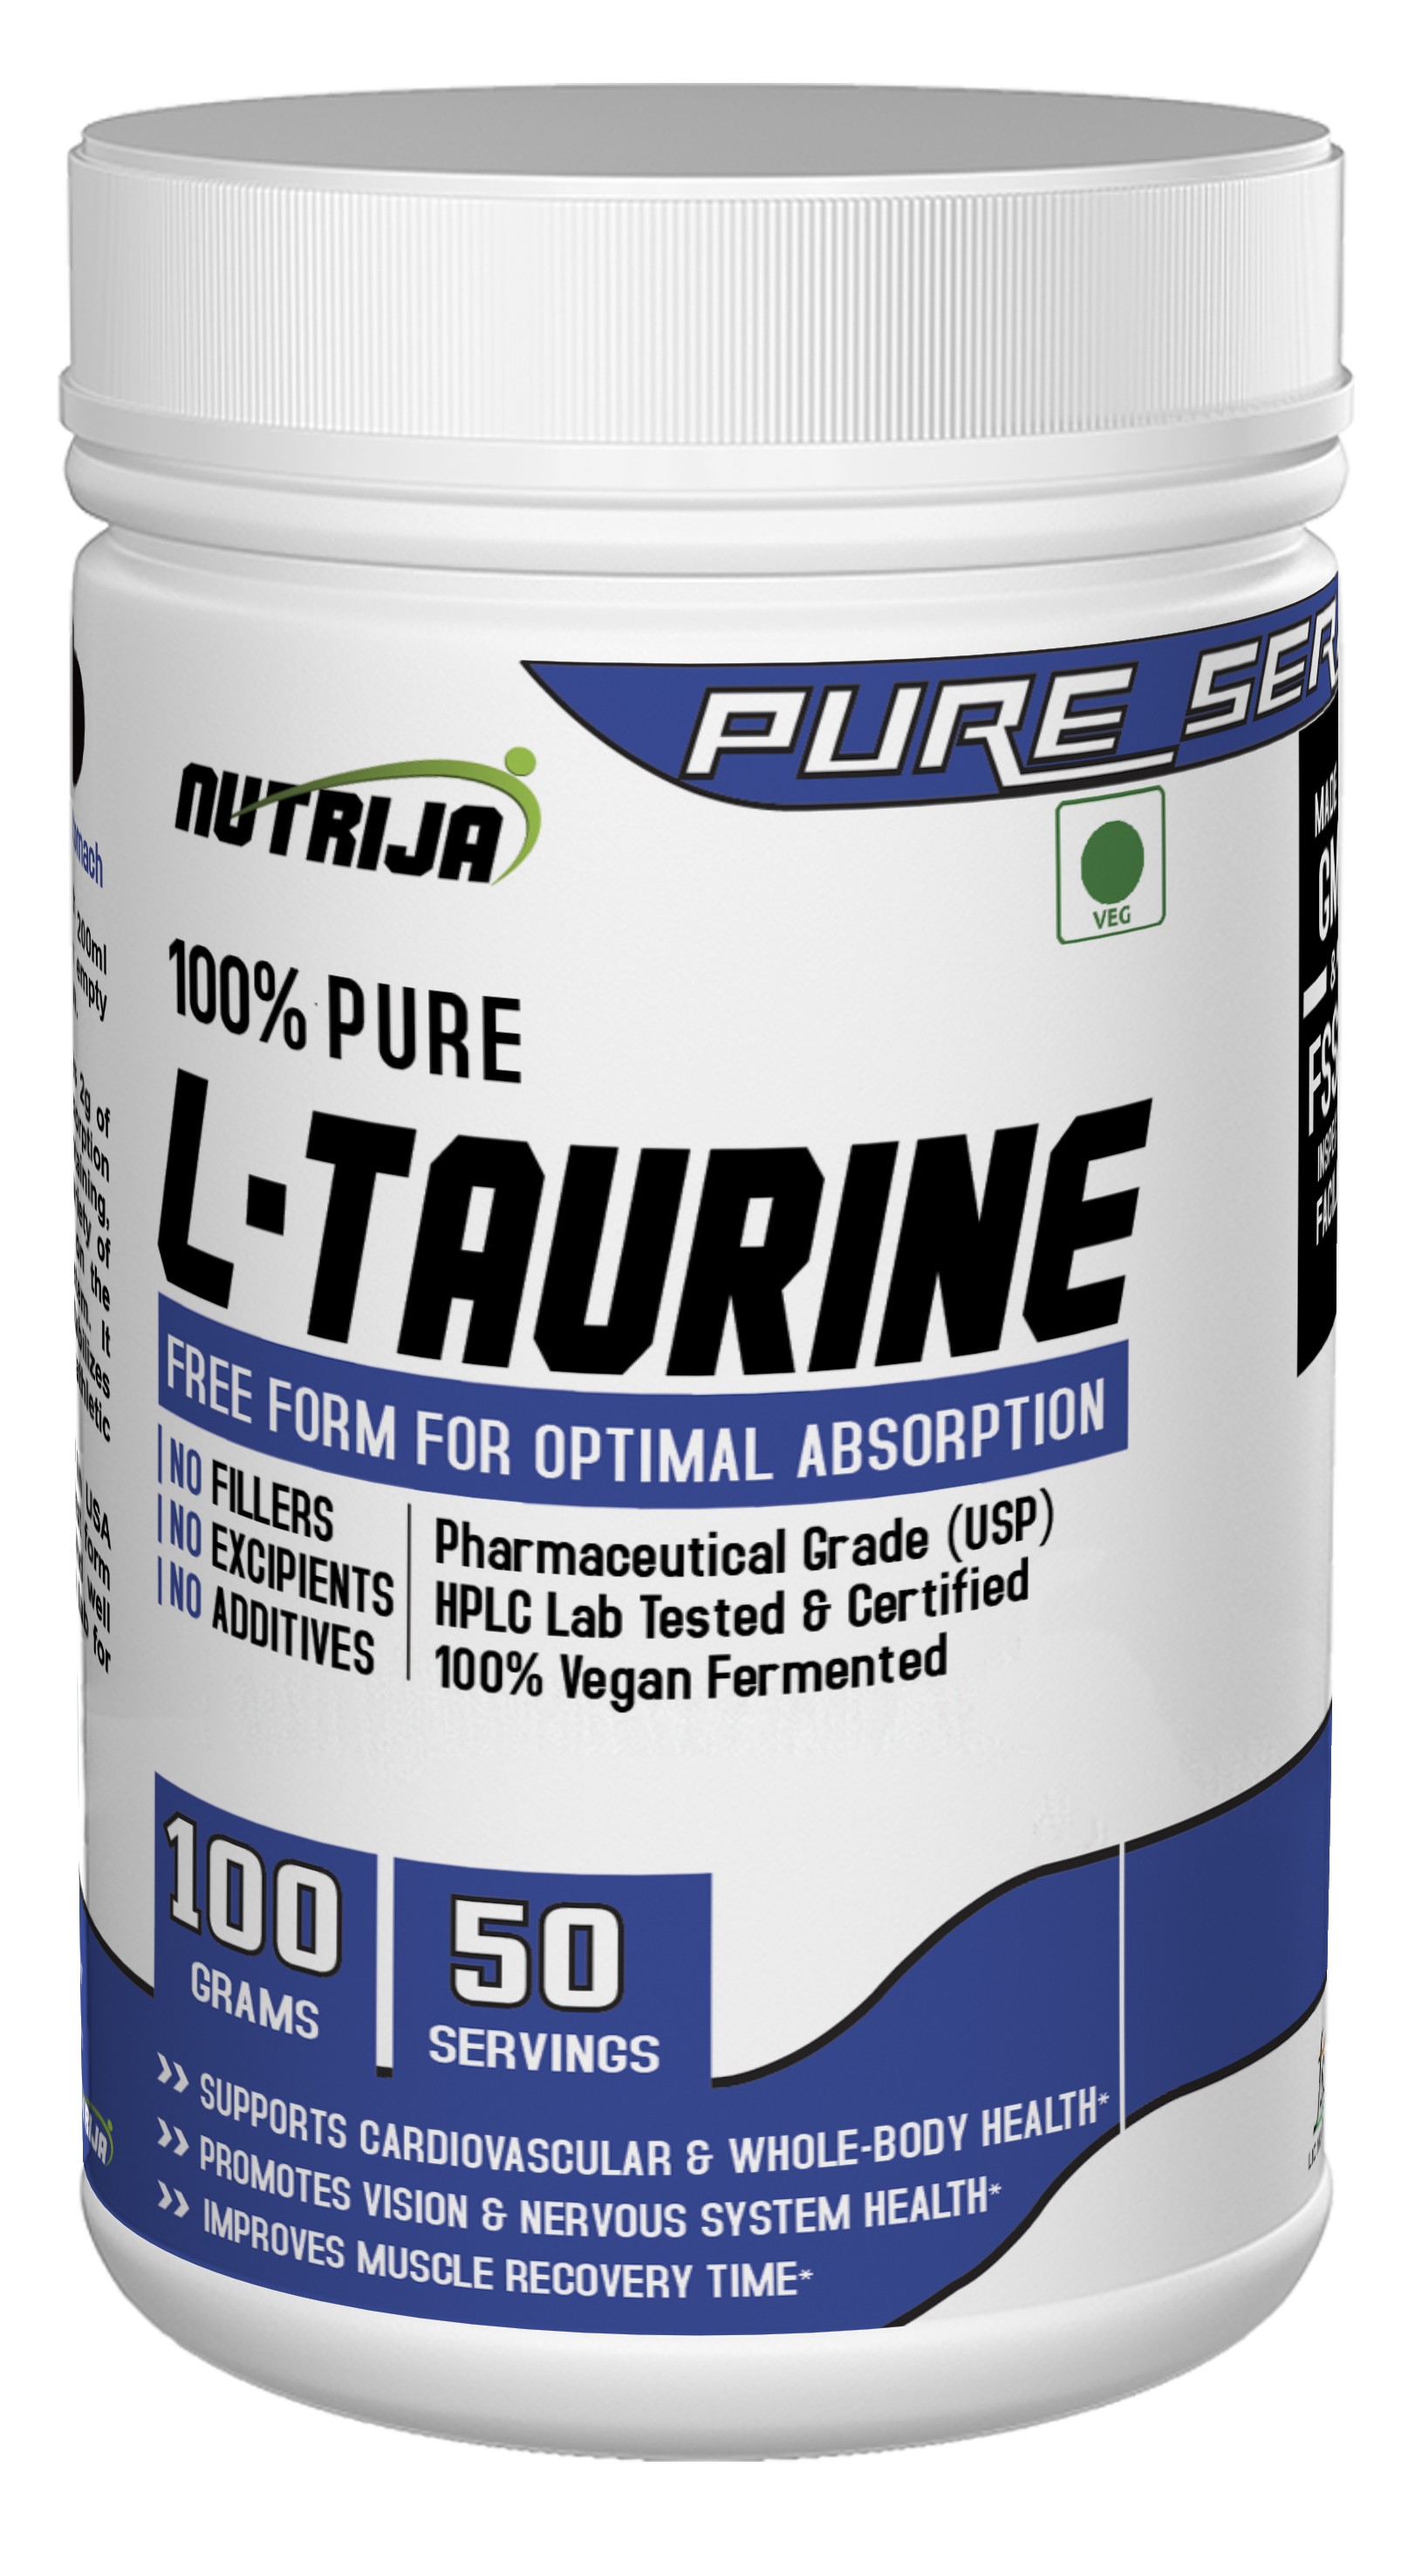 taurine supplements meijer